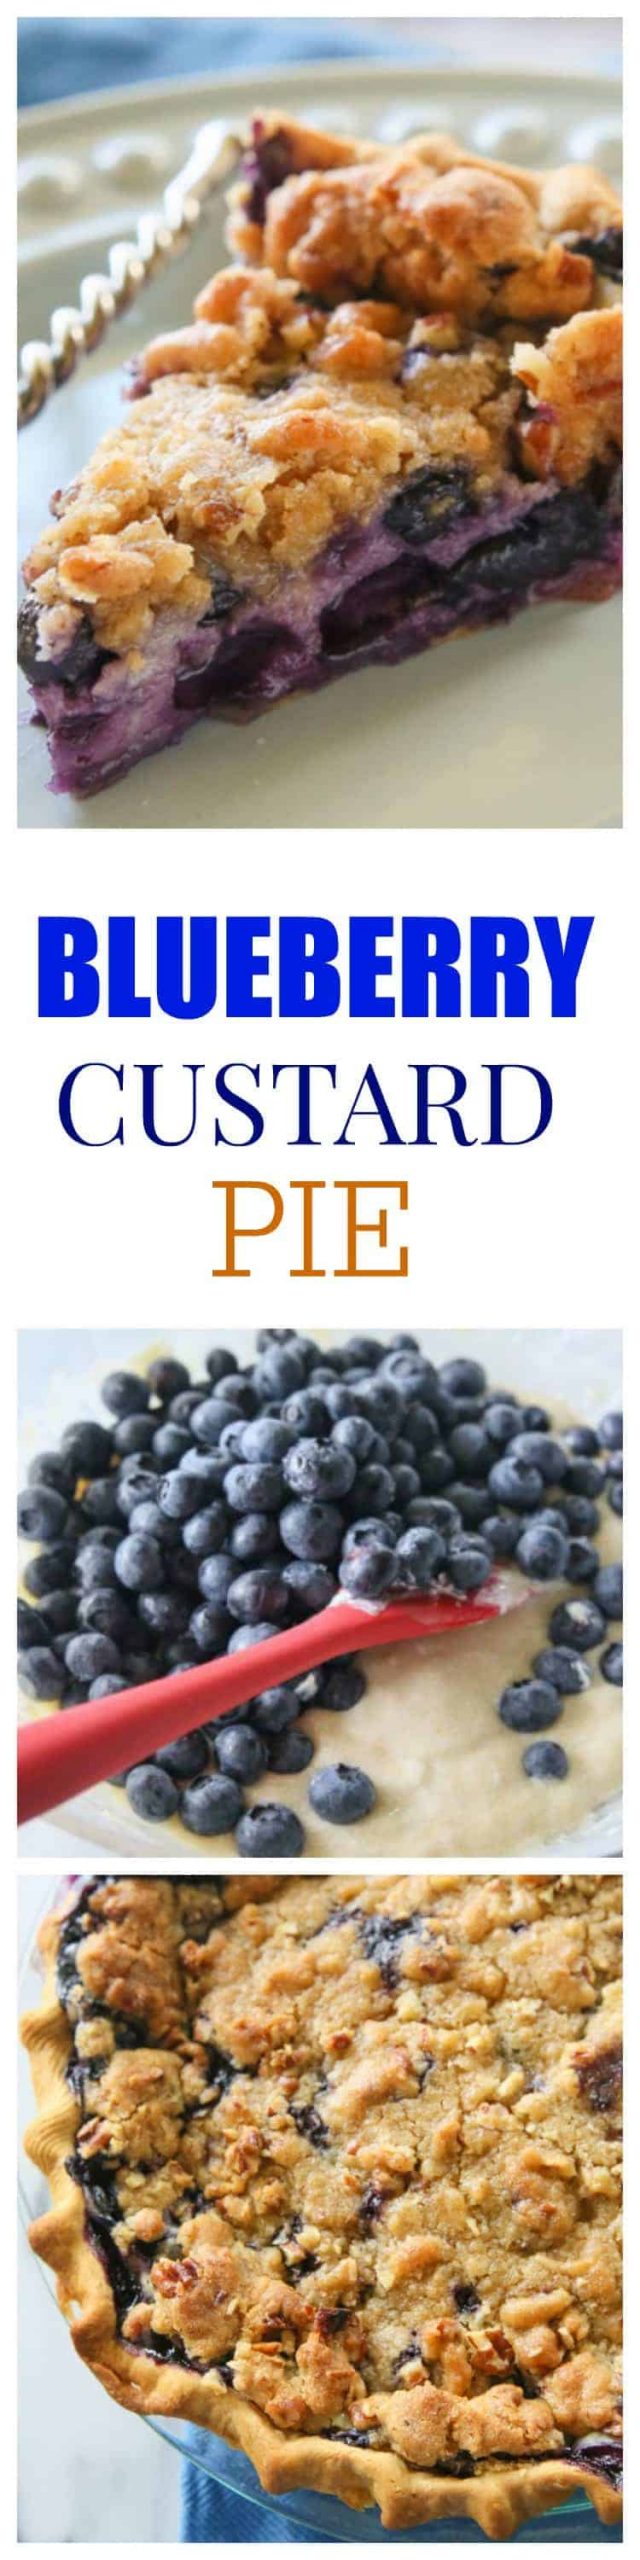 Blueberry Custard Pie is a twist on the classic blueberry pie with a creamy custard filling and topped with a crunchy streusel. #blueberry #custard #pie #summer #dessert